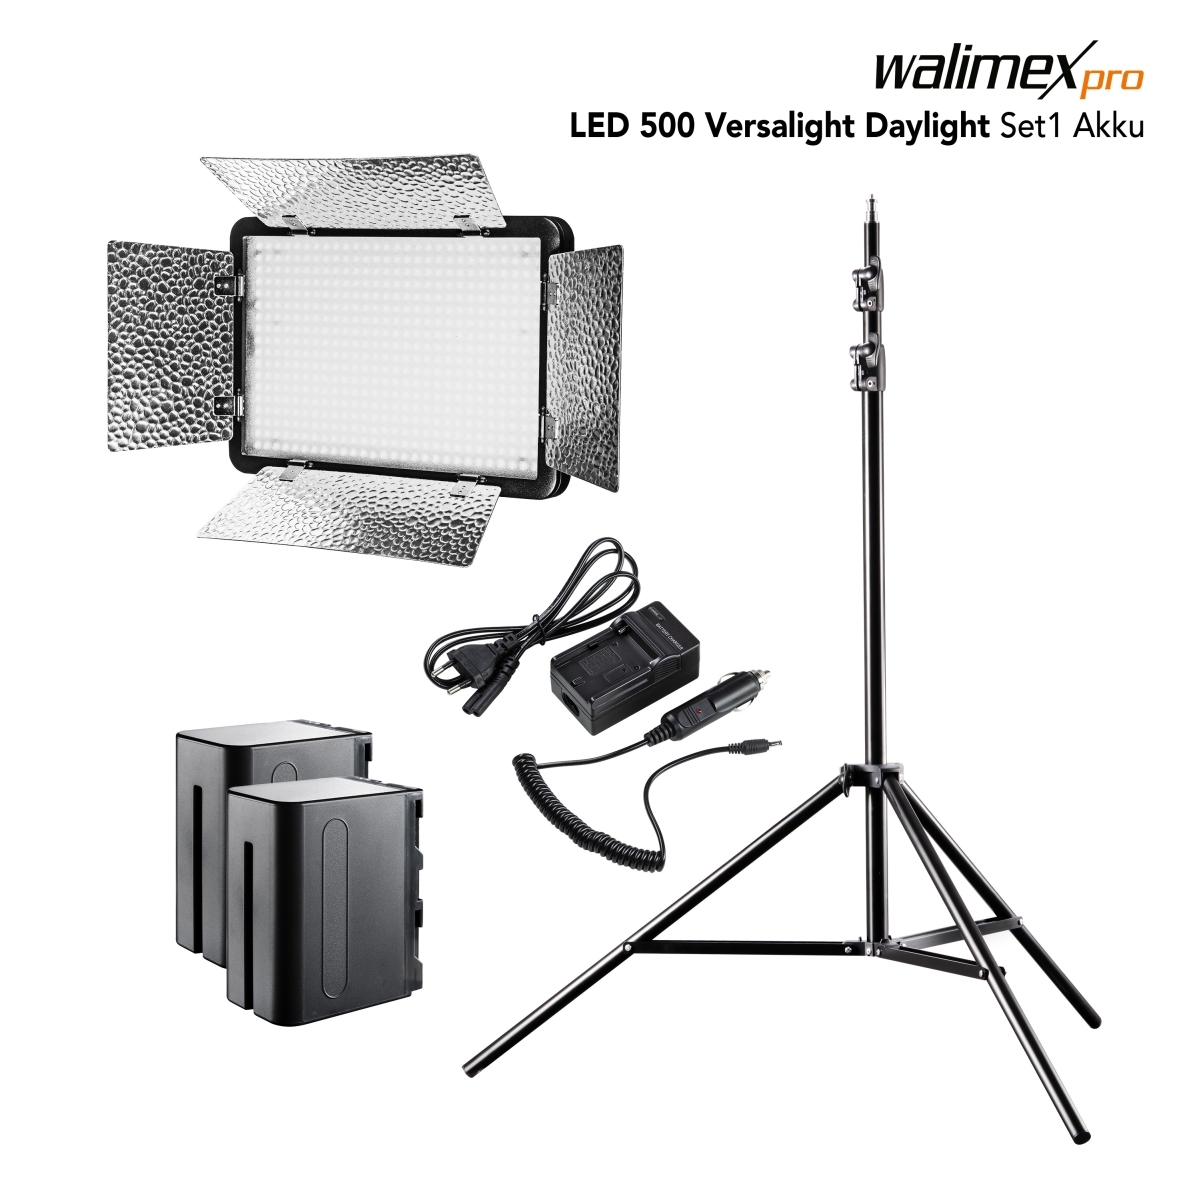 Walimex pro LED Versalight 500 Daylight Set inkl Stativ 